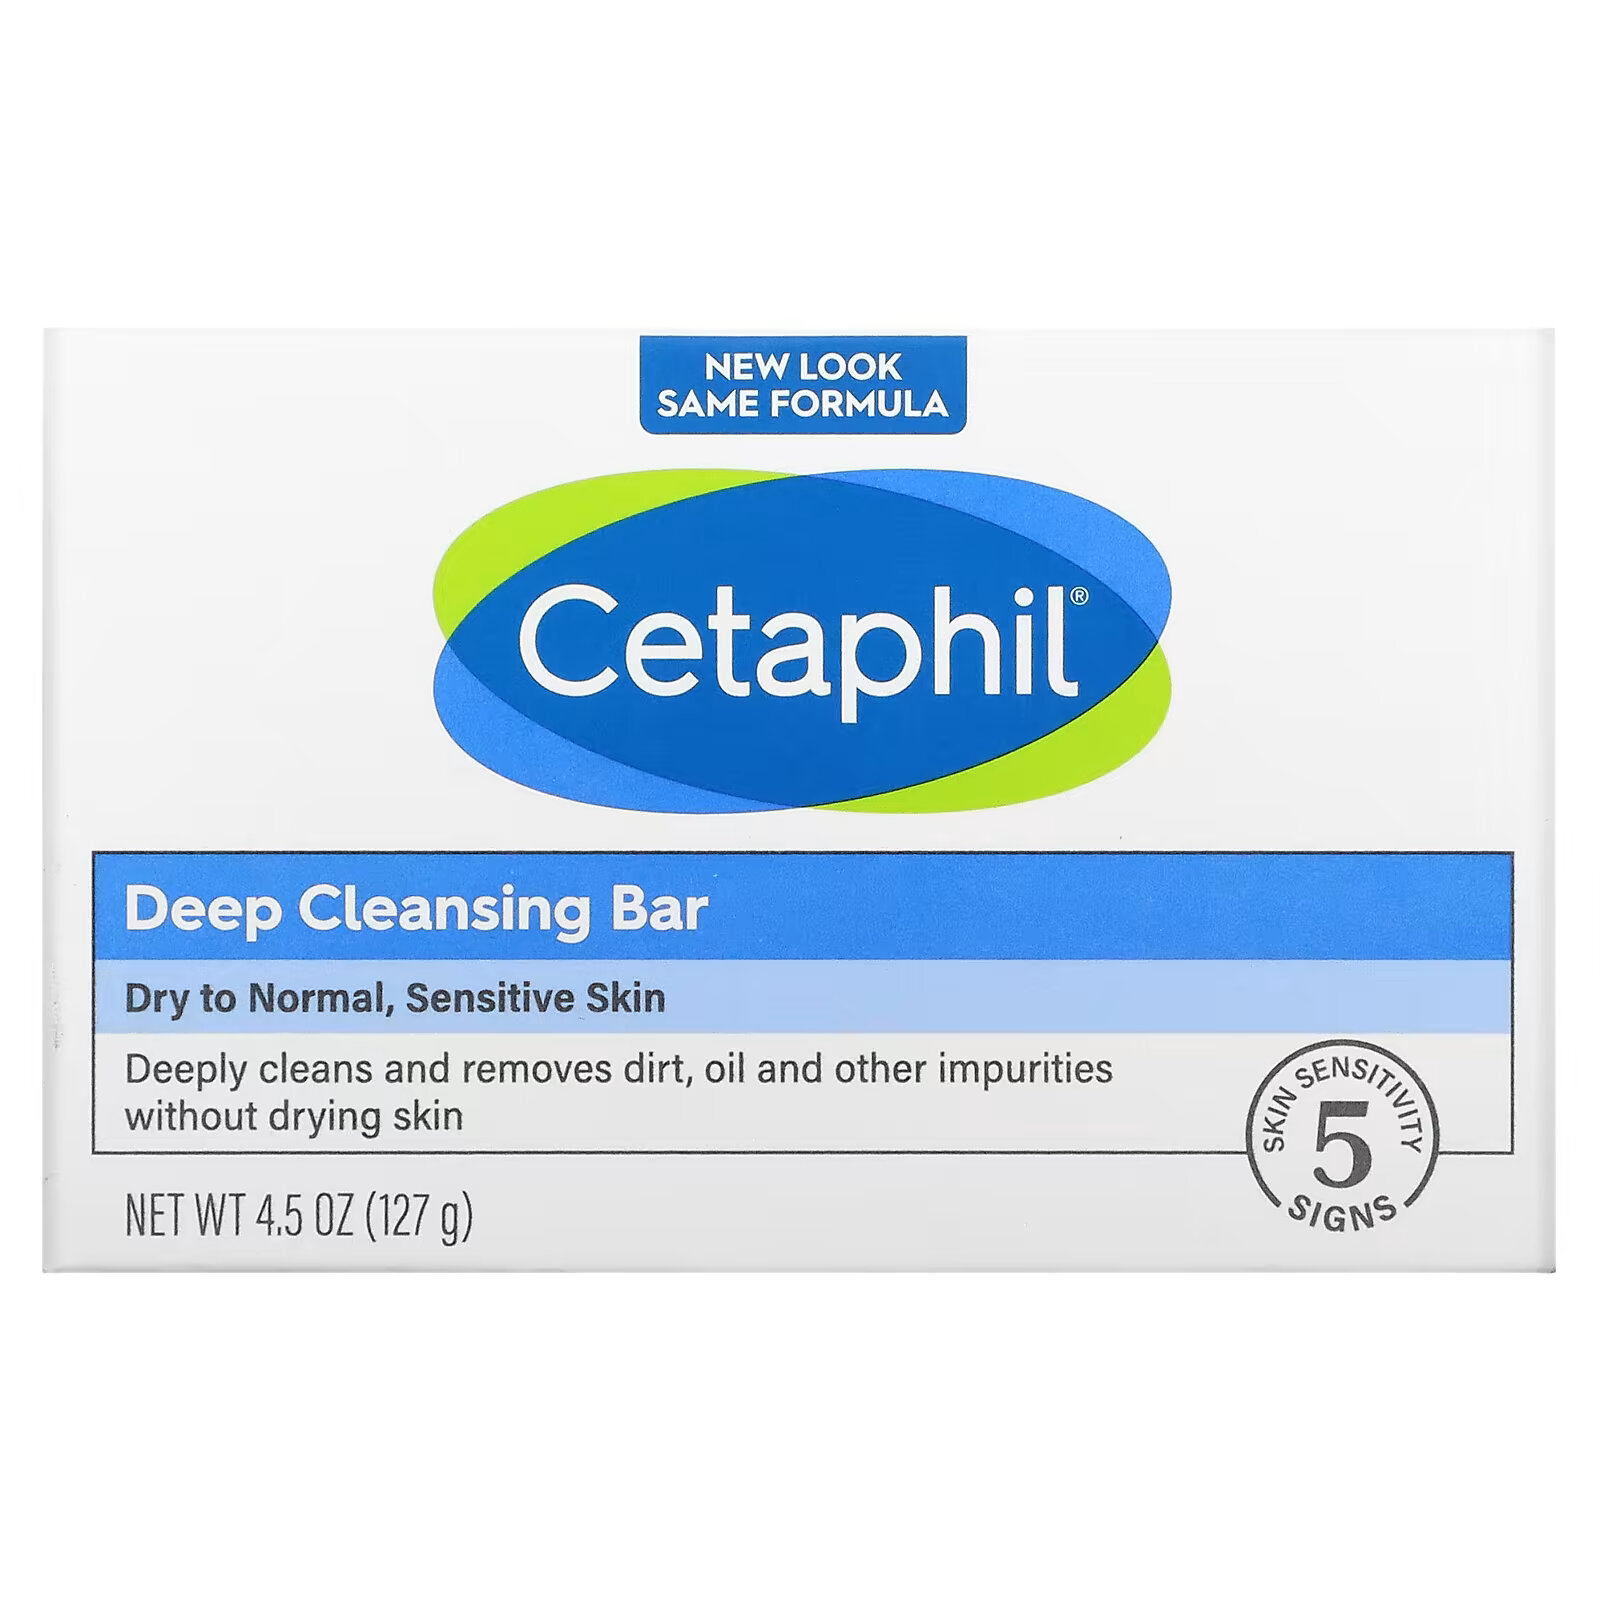 Мыло Cetaphil для глубокого очищения, 127 г мыло cetaphil для глубокого очищения 127 г